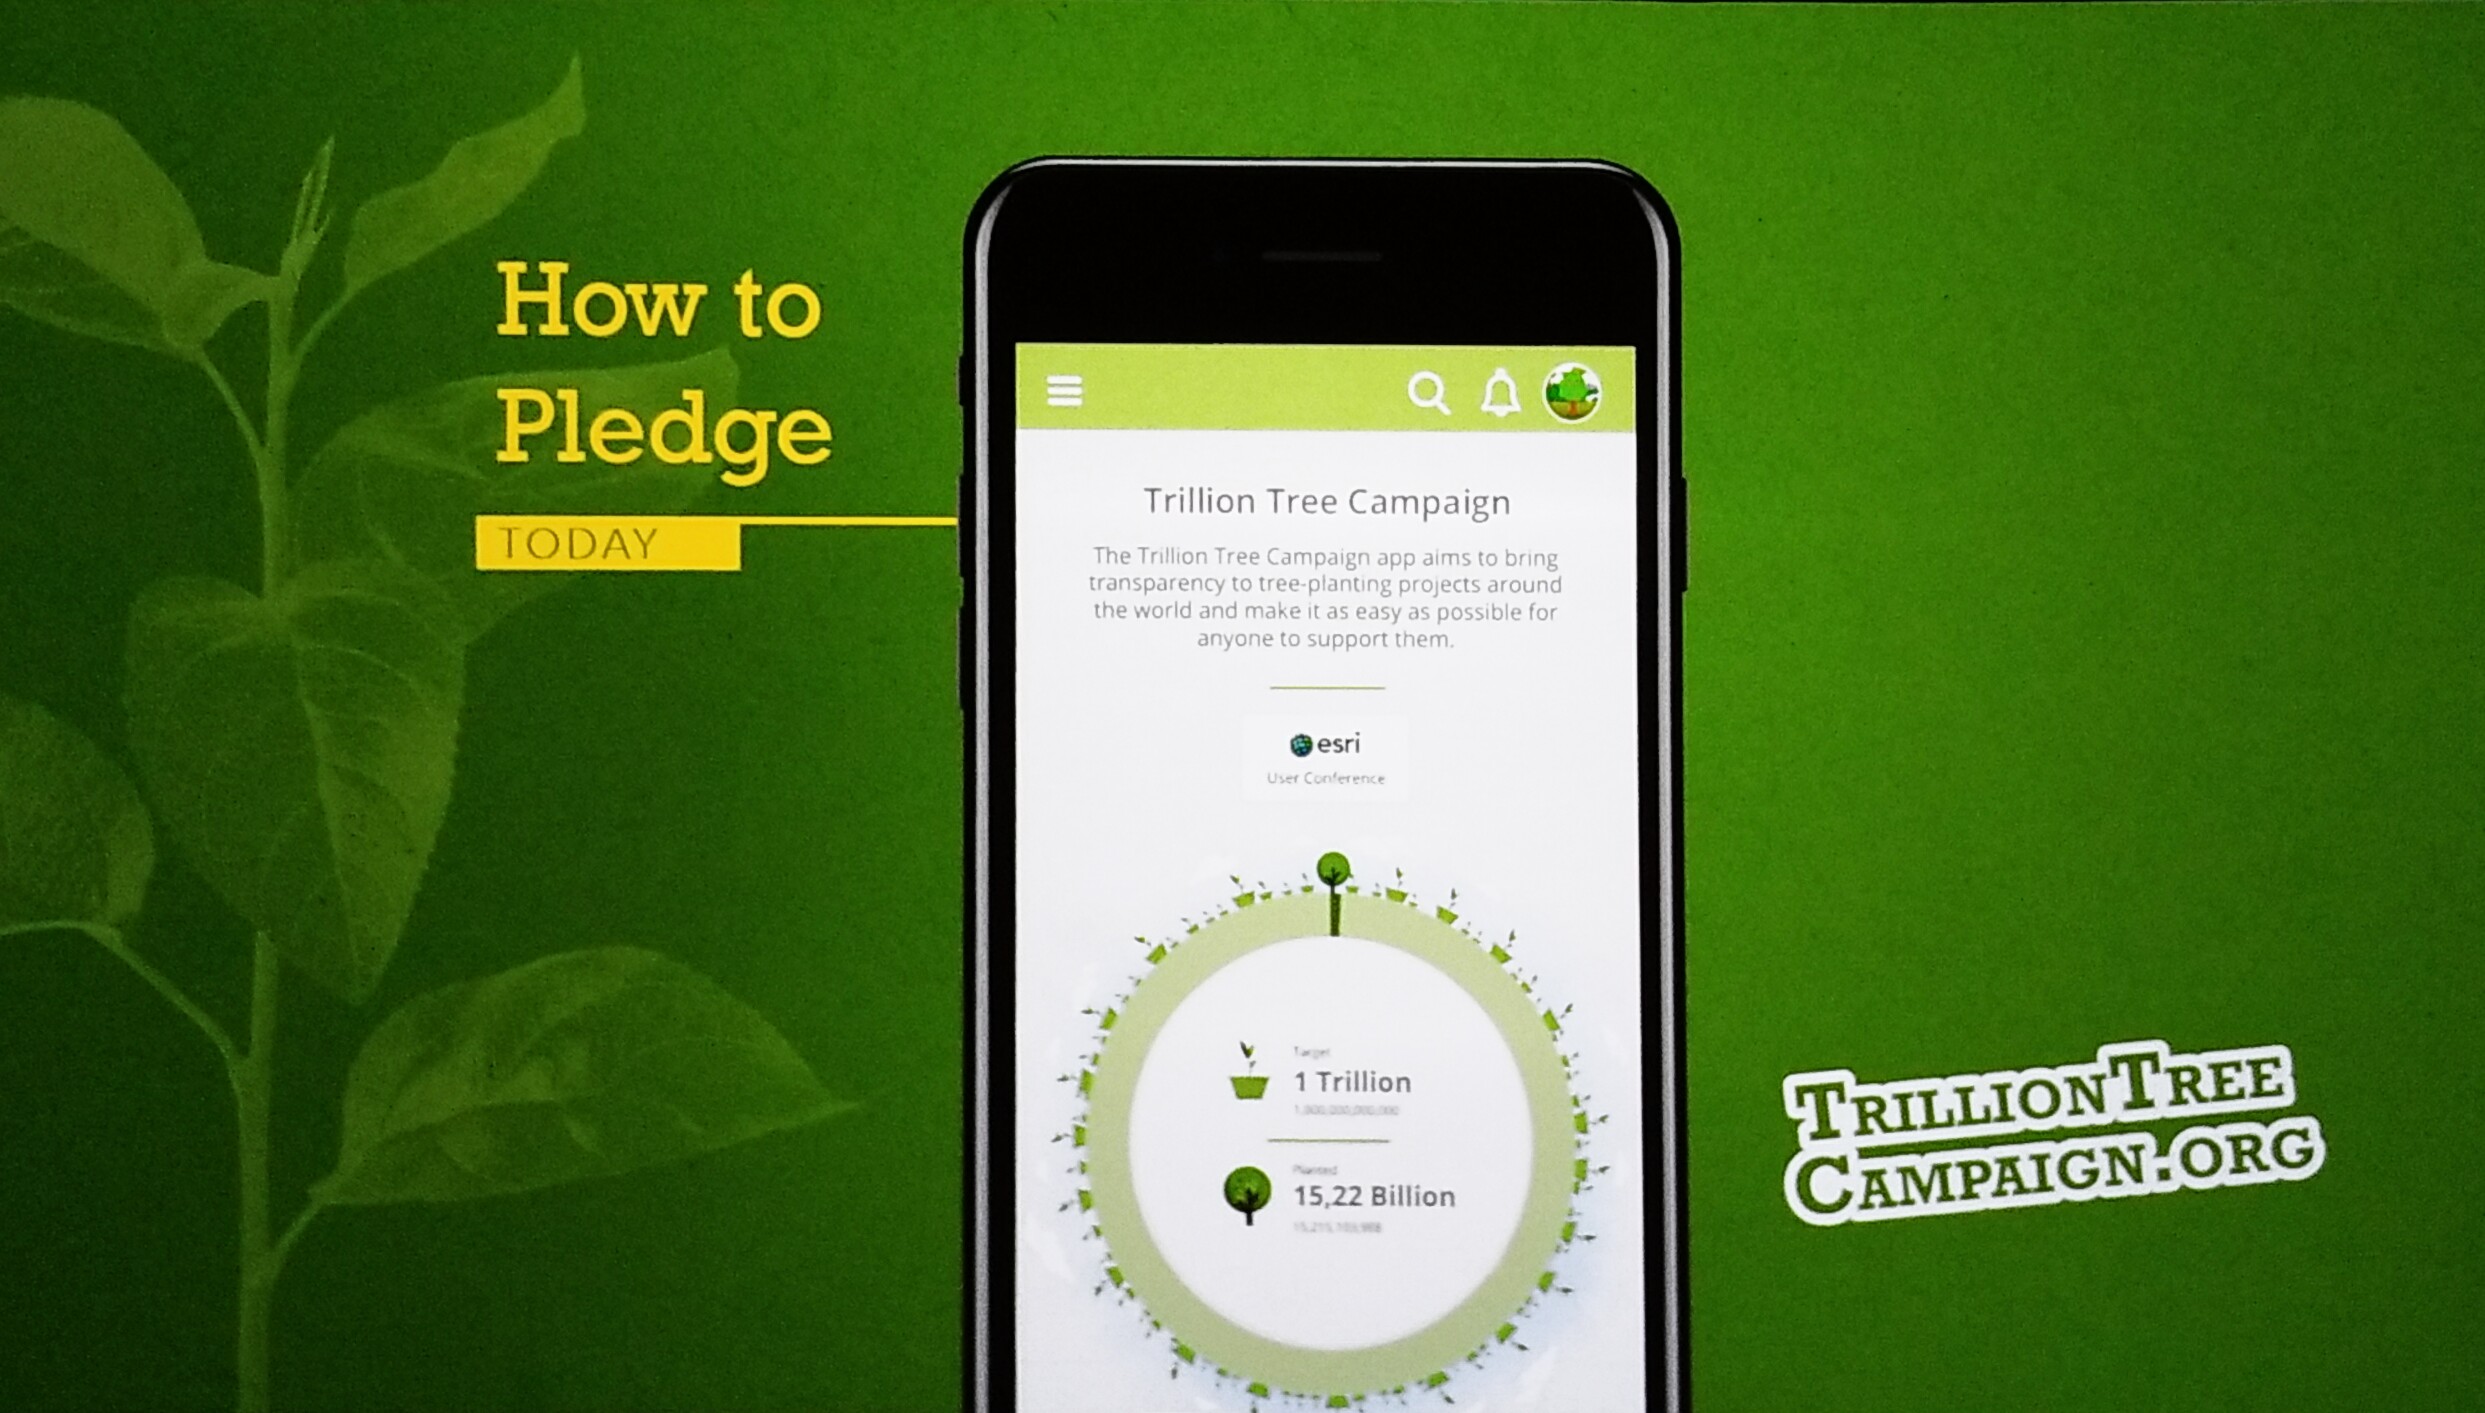 Trillion Tree Campaign App